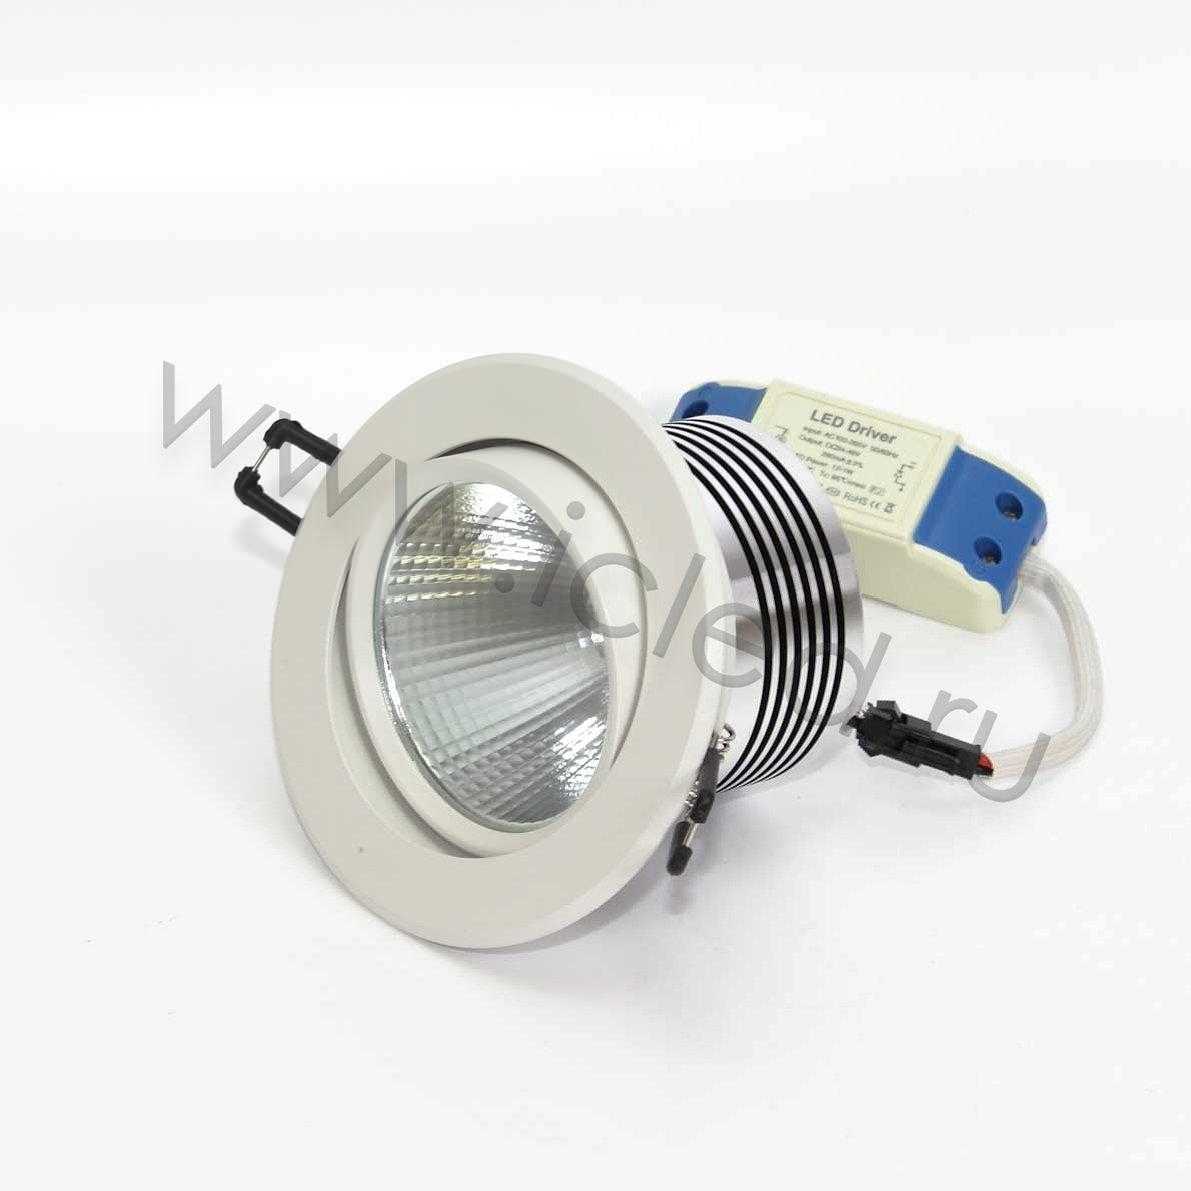 Светодиодные светильники Светодиодный светильник встраиваемый 110 series white housing BW162 (10W,220V,day white)